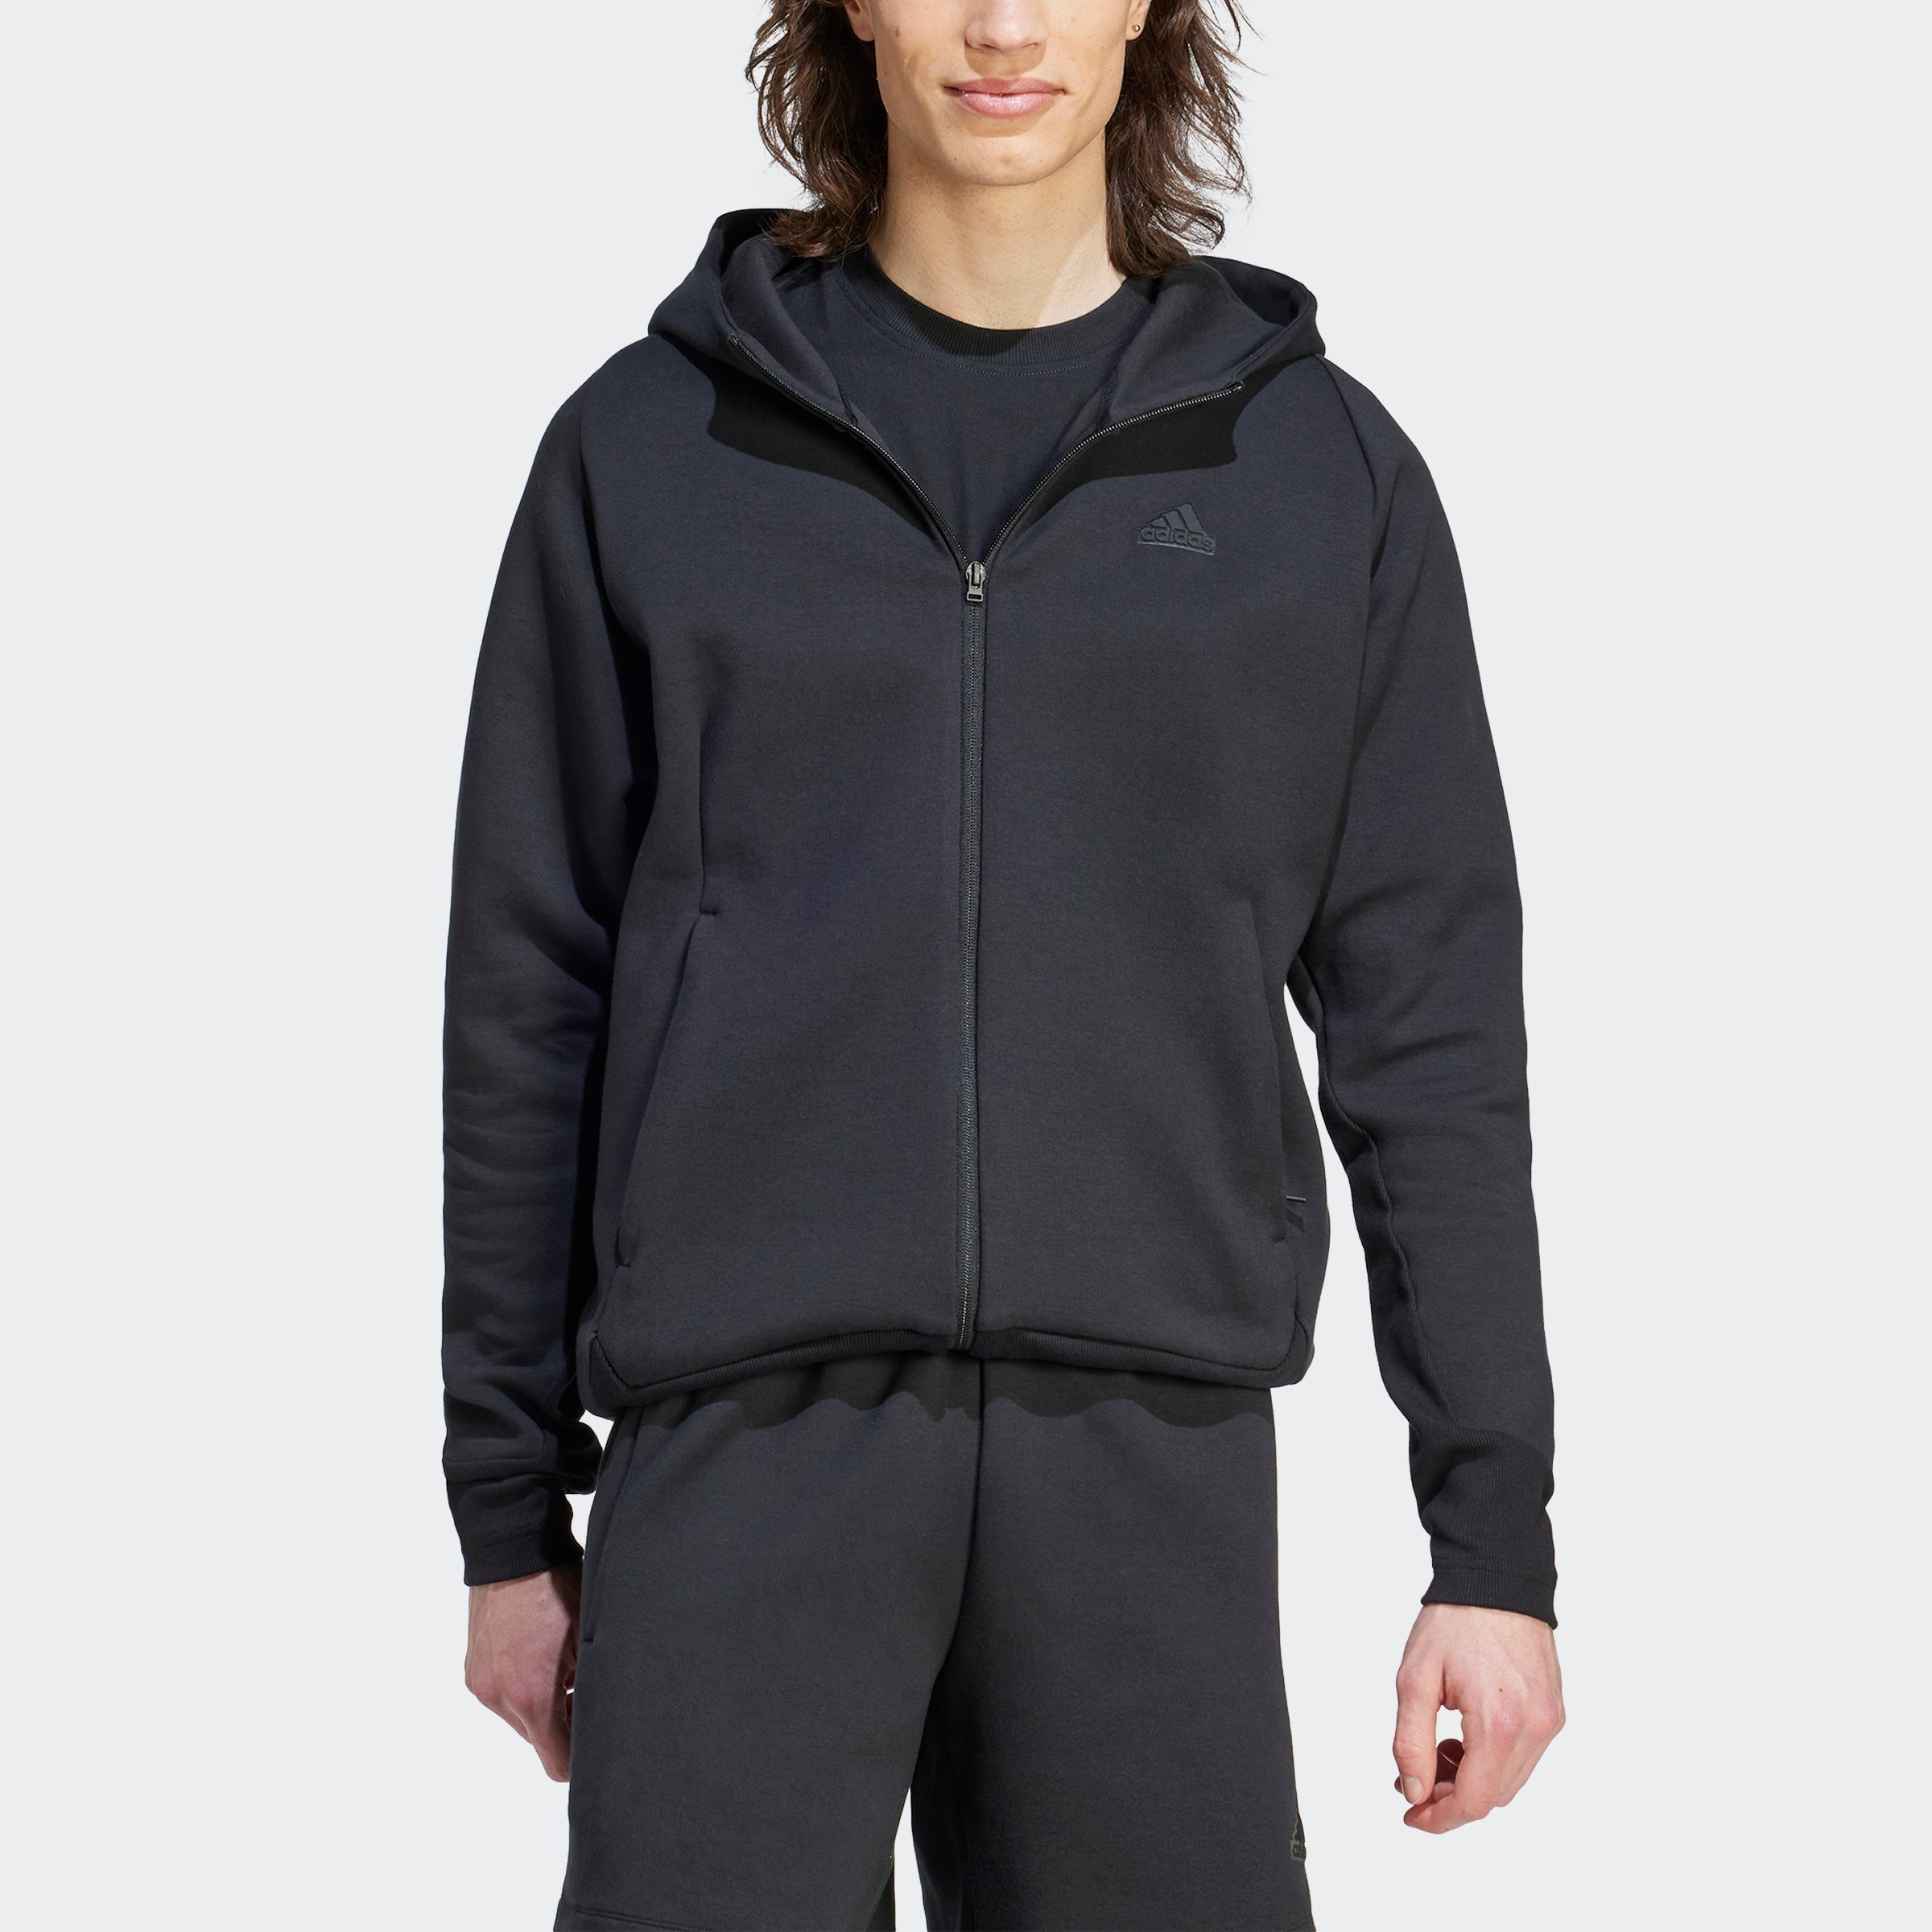 Z.N.E. M Sportswear adidas Sweatshirt FZ PR Black